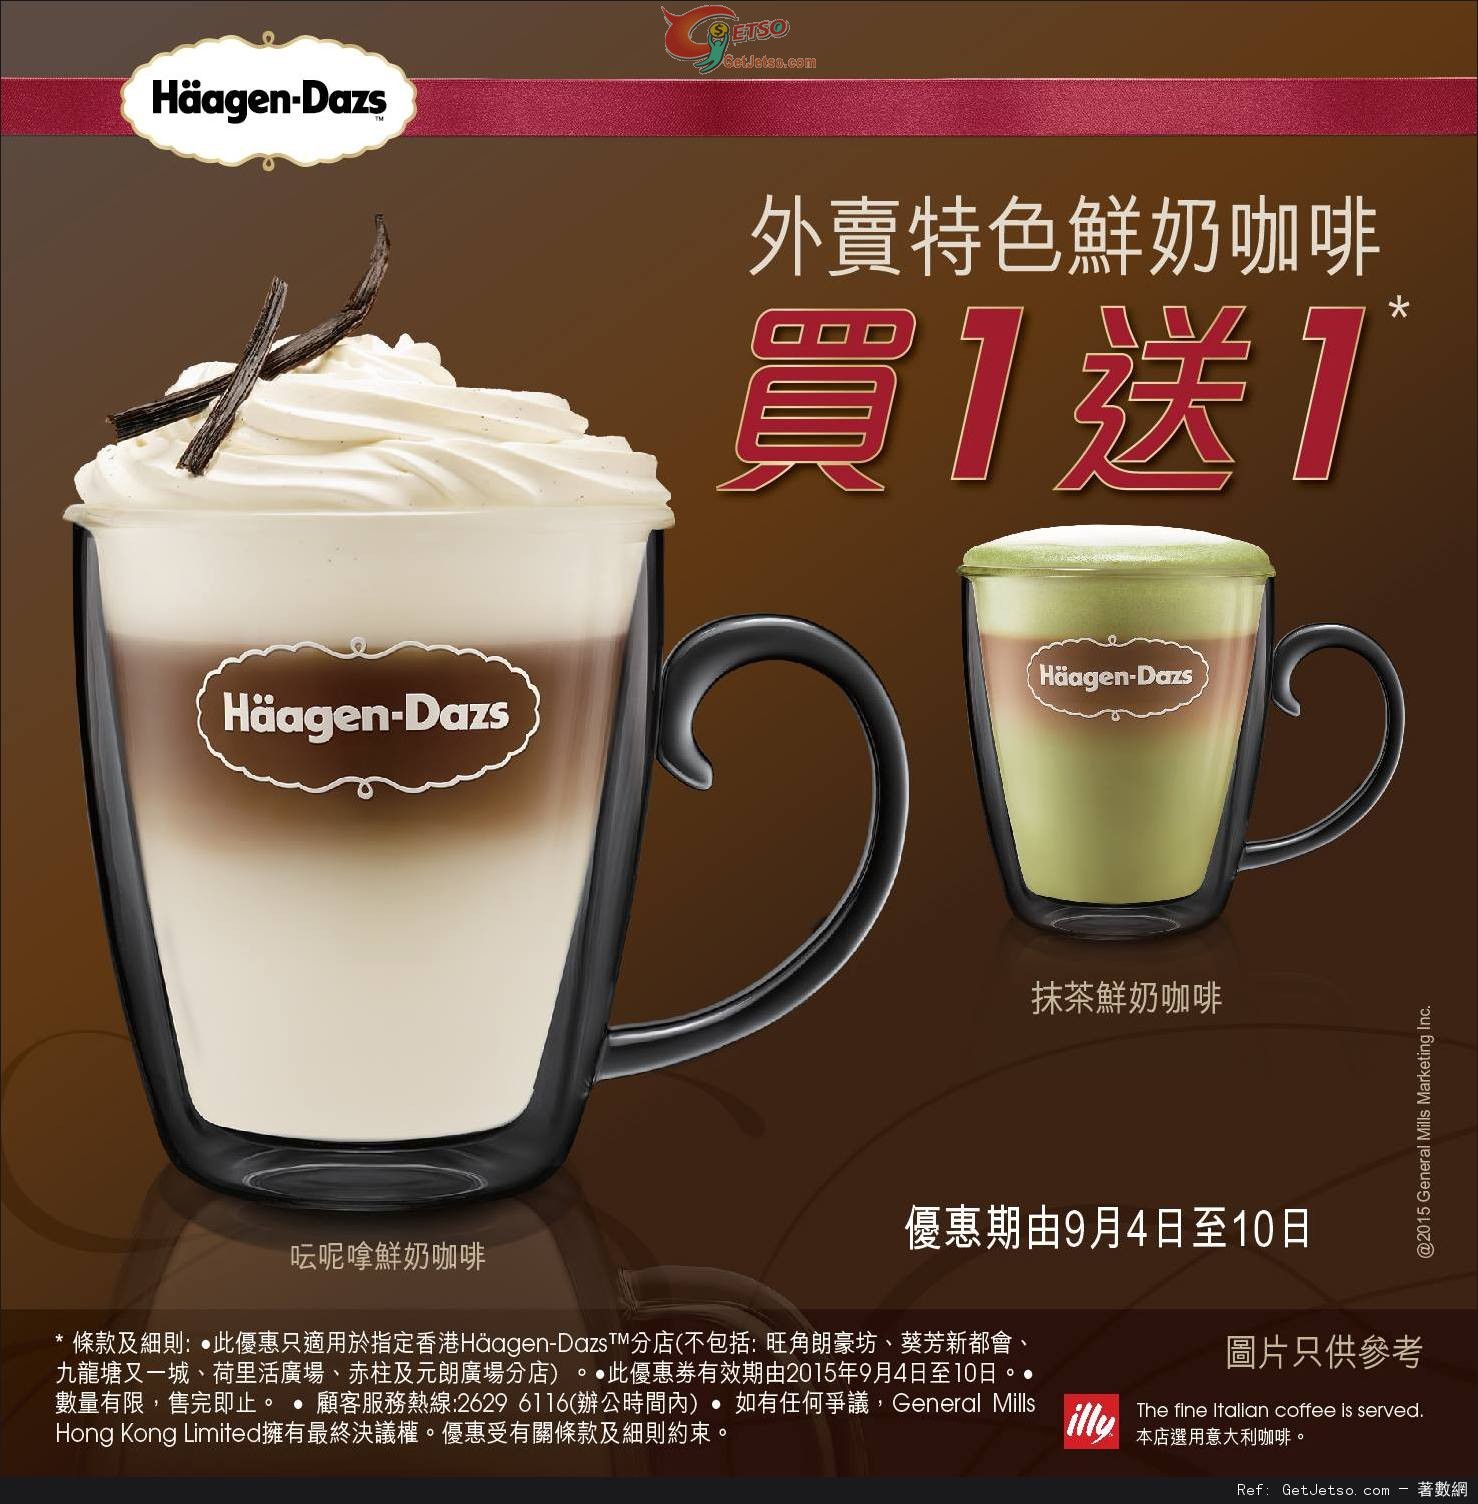 Häagen-Dazs 外賣特色鮮奶咖啡買1送1優惠(至15年9月10日)圖片1